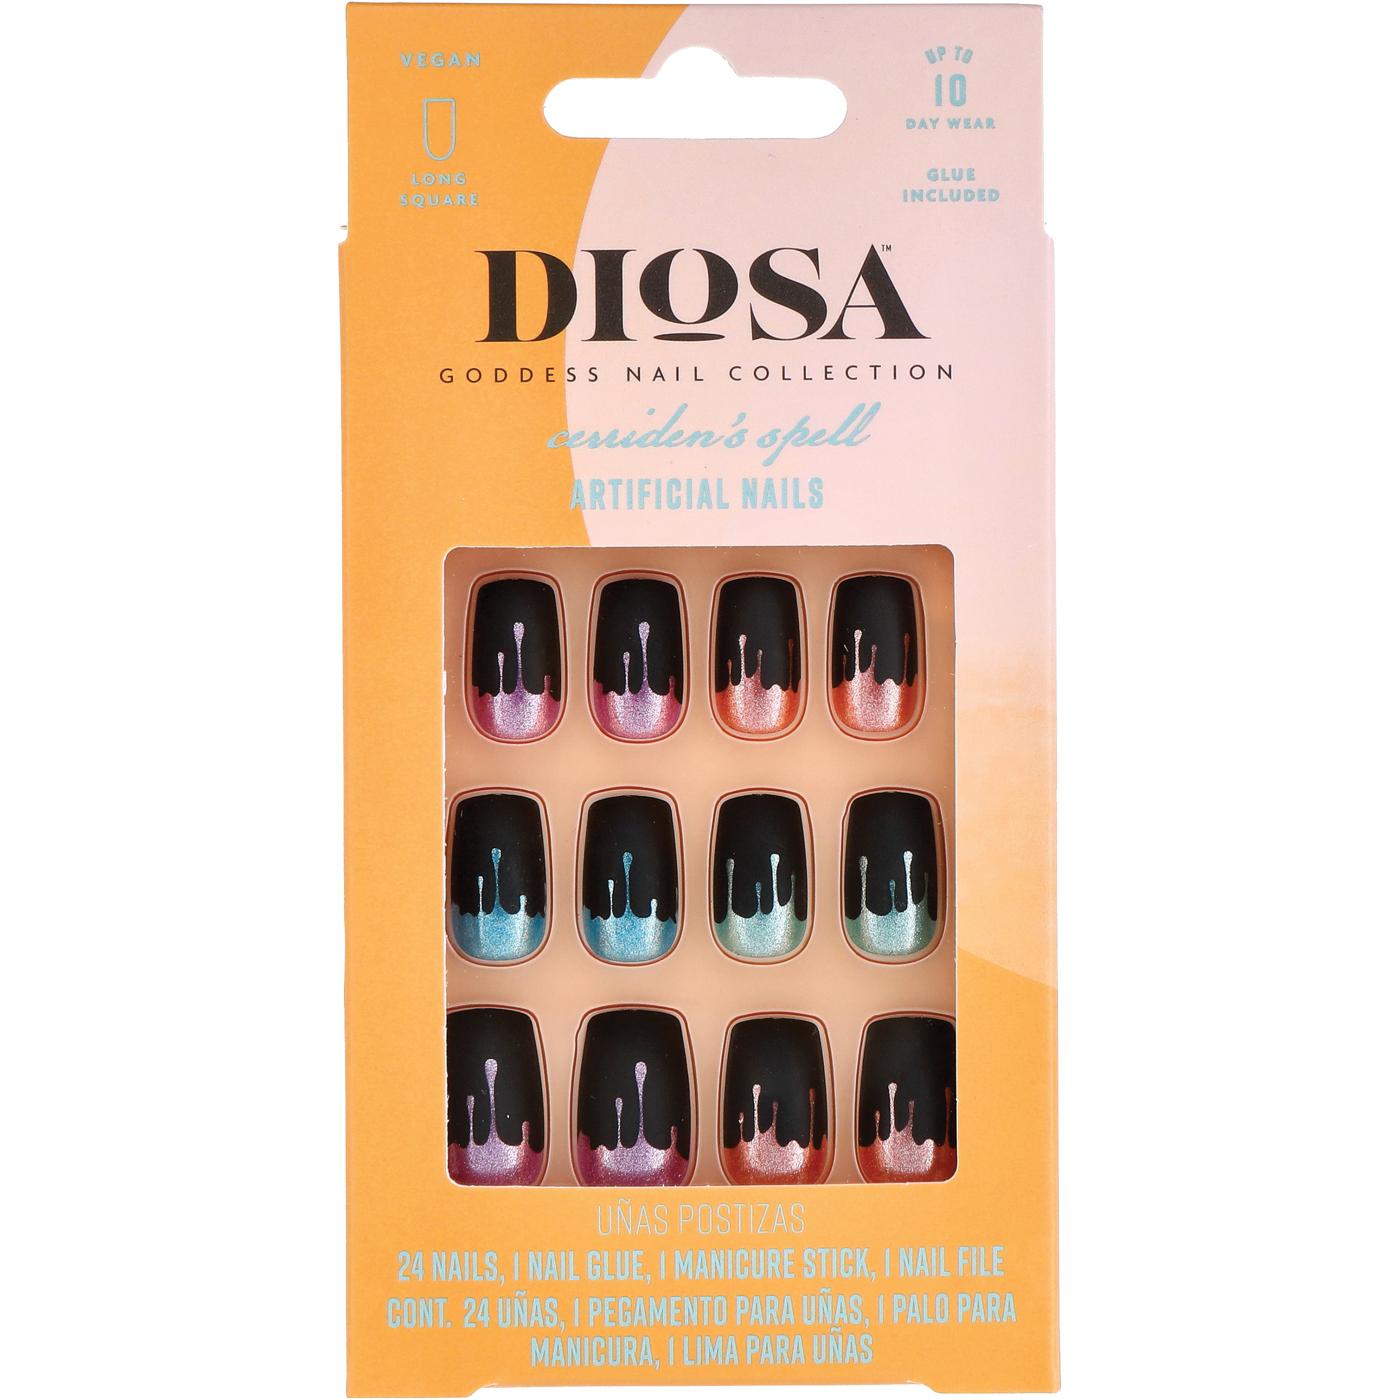 Diosa Cerriden's Spell Artificial Nails - Glitter Matte Black; image 1 of 3